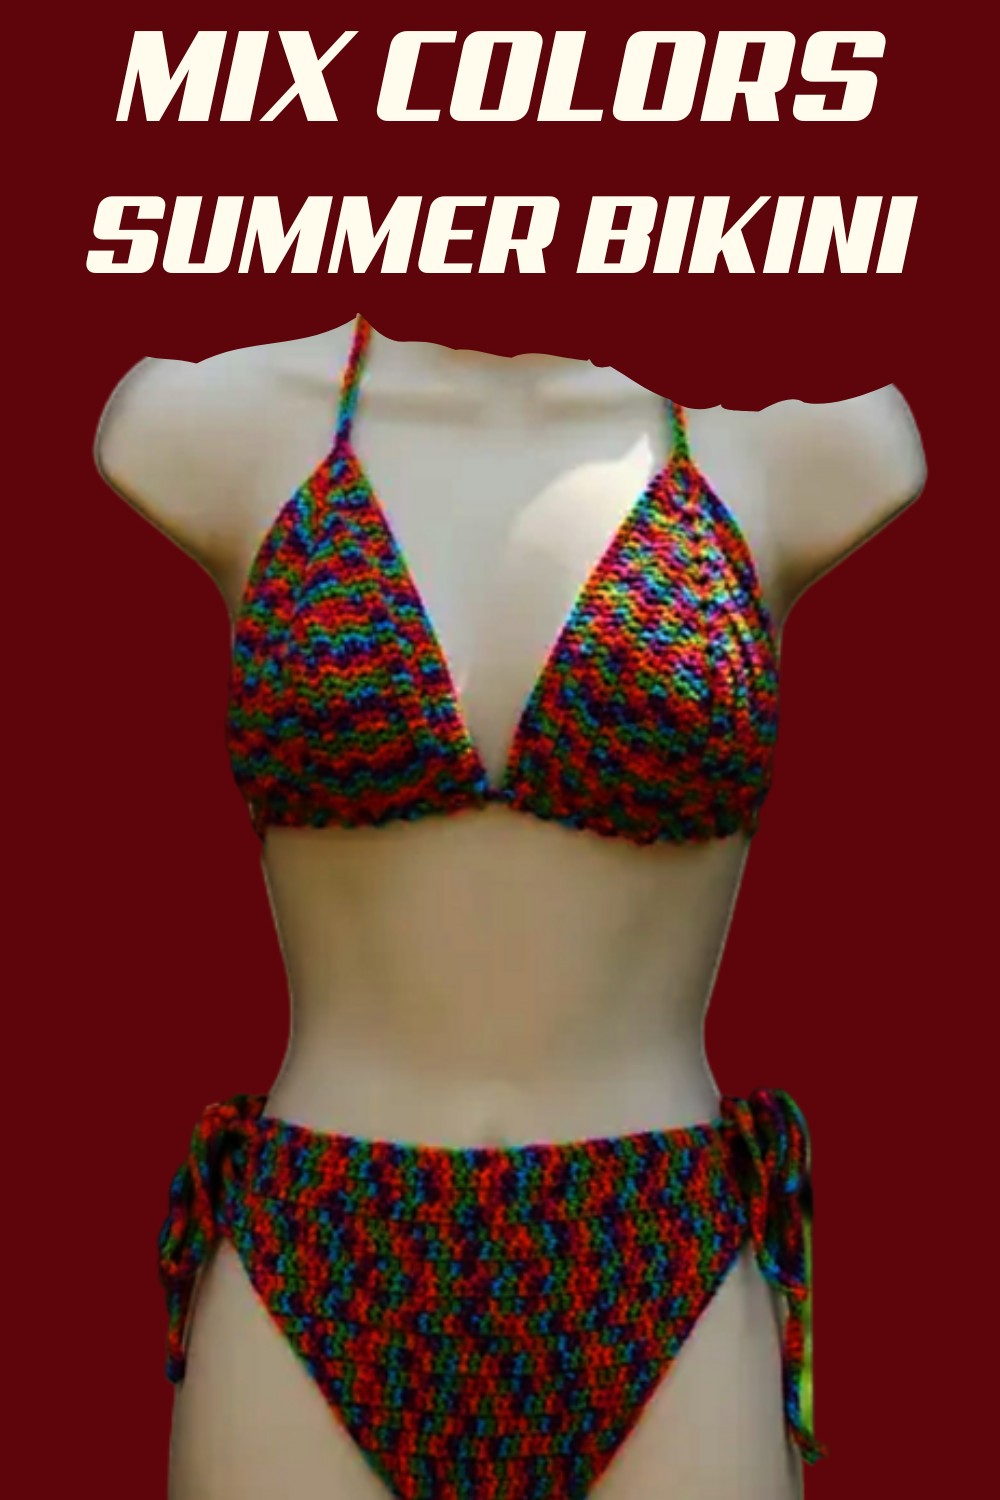 Mix Colors Summer Bikini